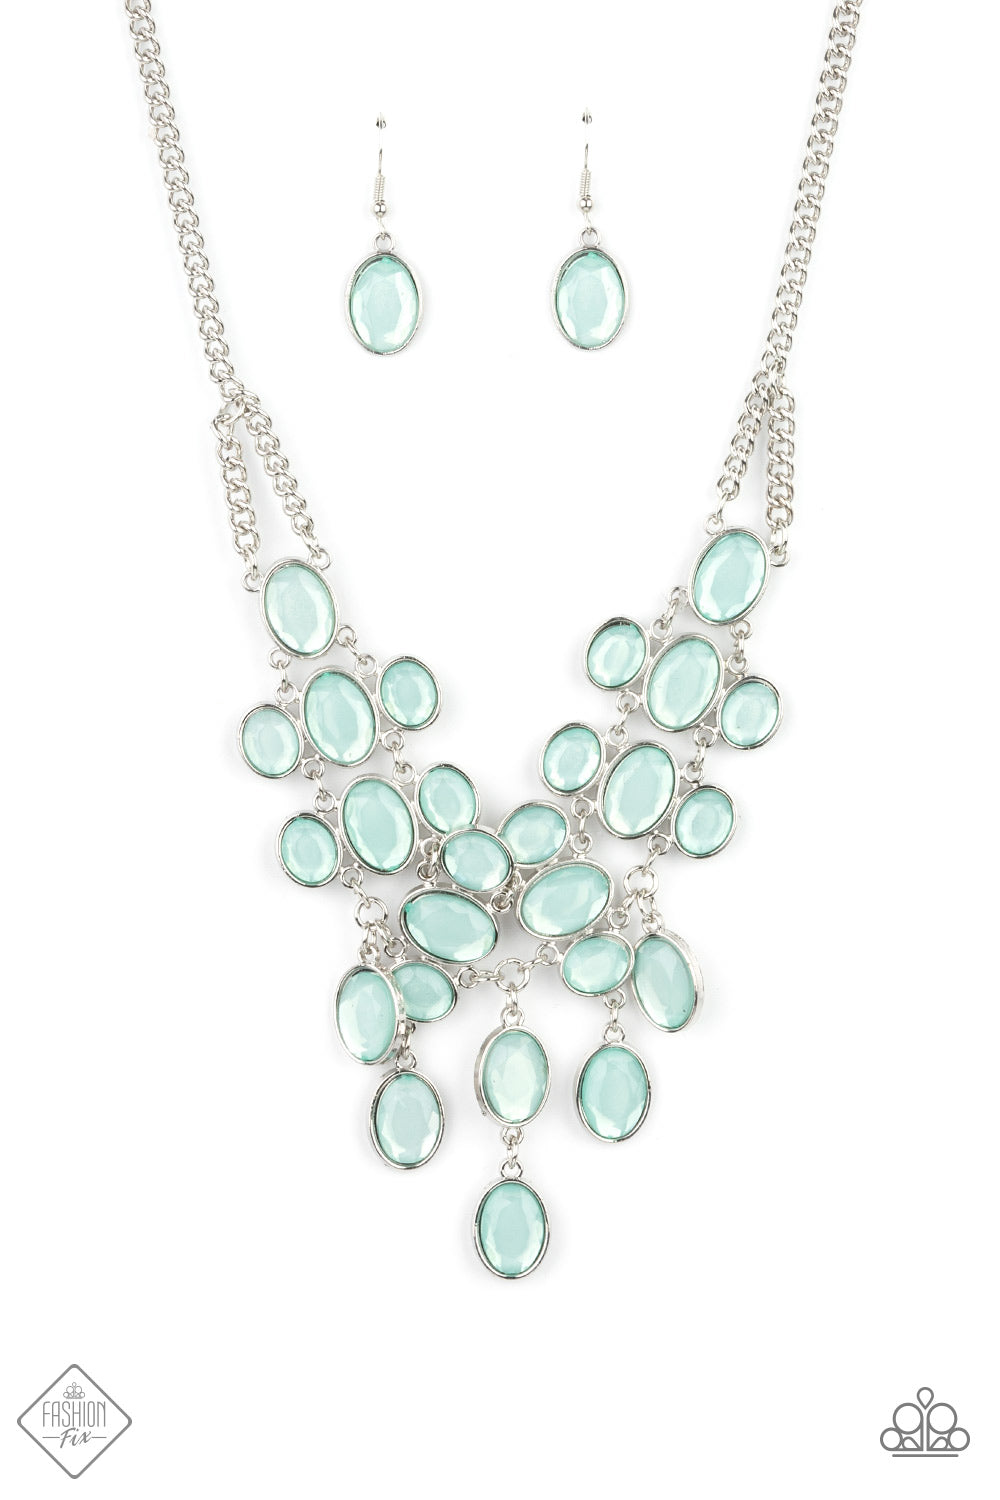 Paparazzi Accessories - Serene Gleam - Blue Necklace Fashion Fix May 2021 #GM0521